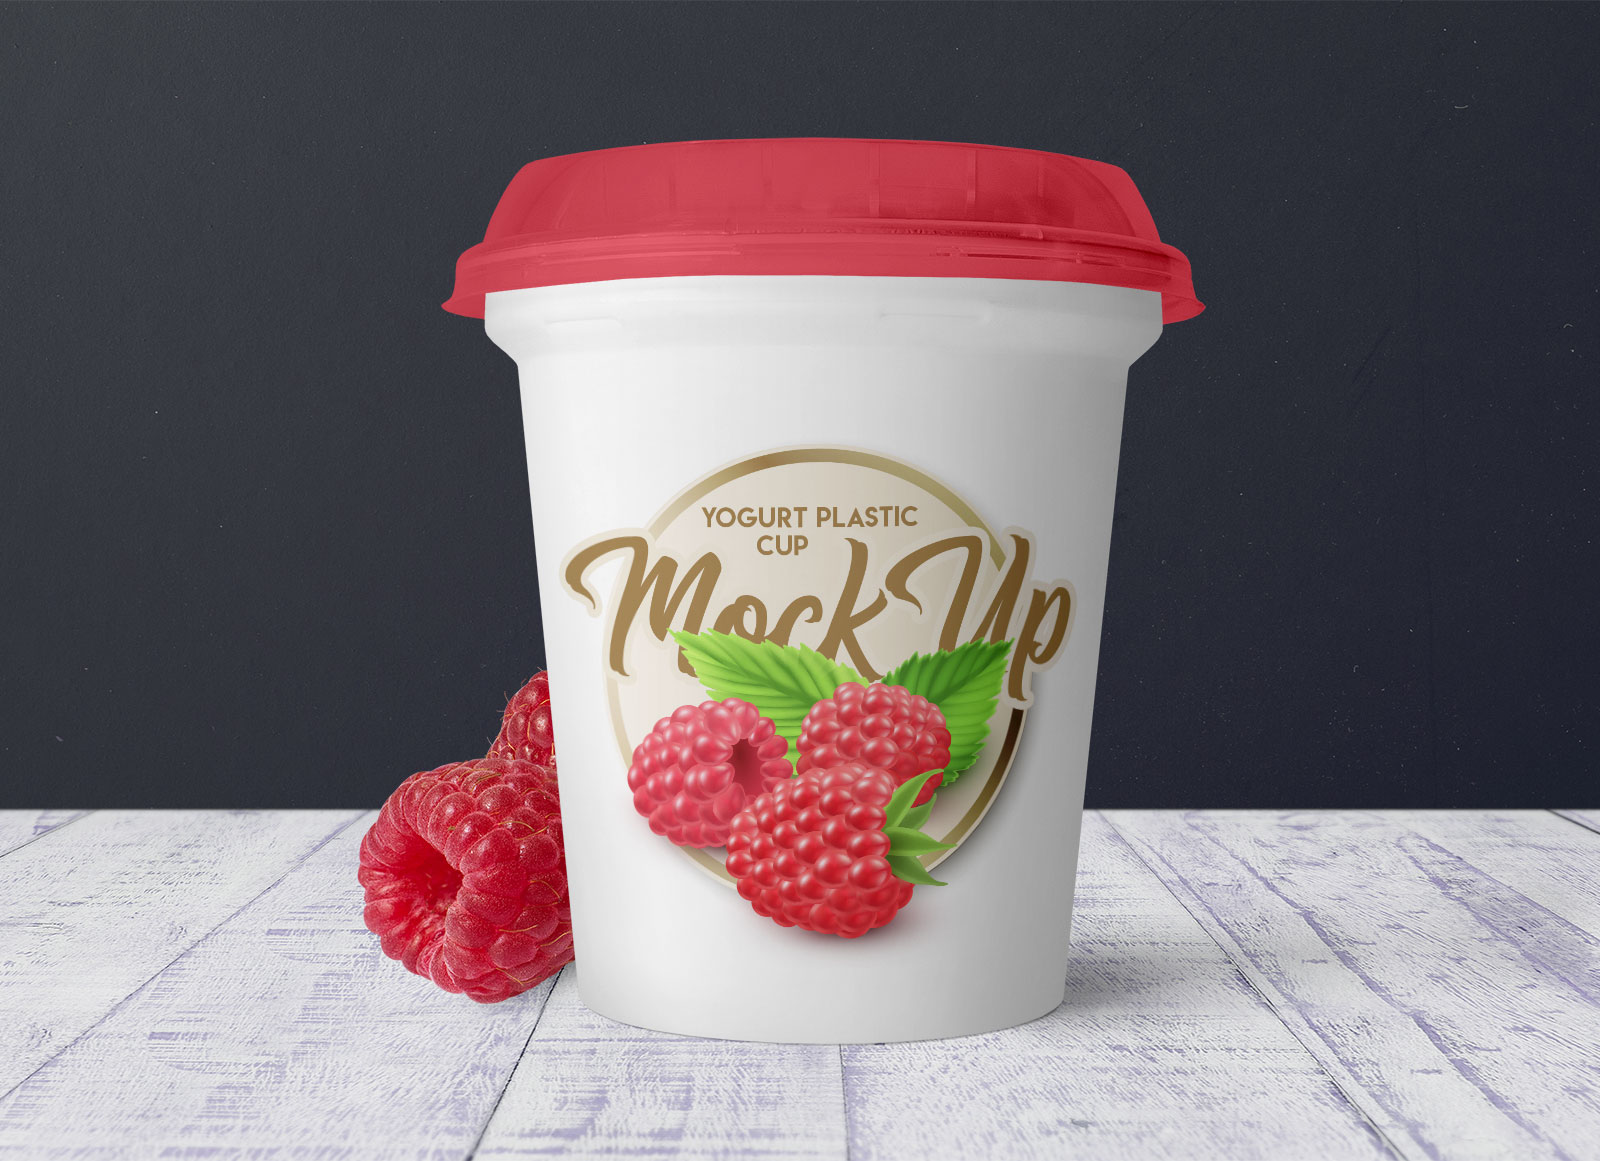 Yogurt / Cup Ice Cream Packaging Mockup